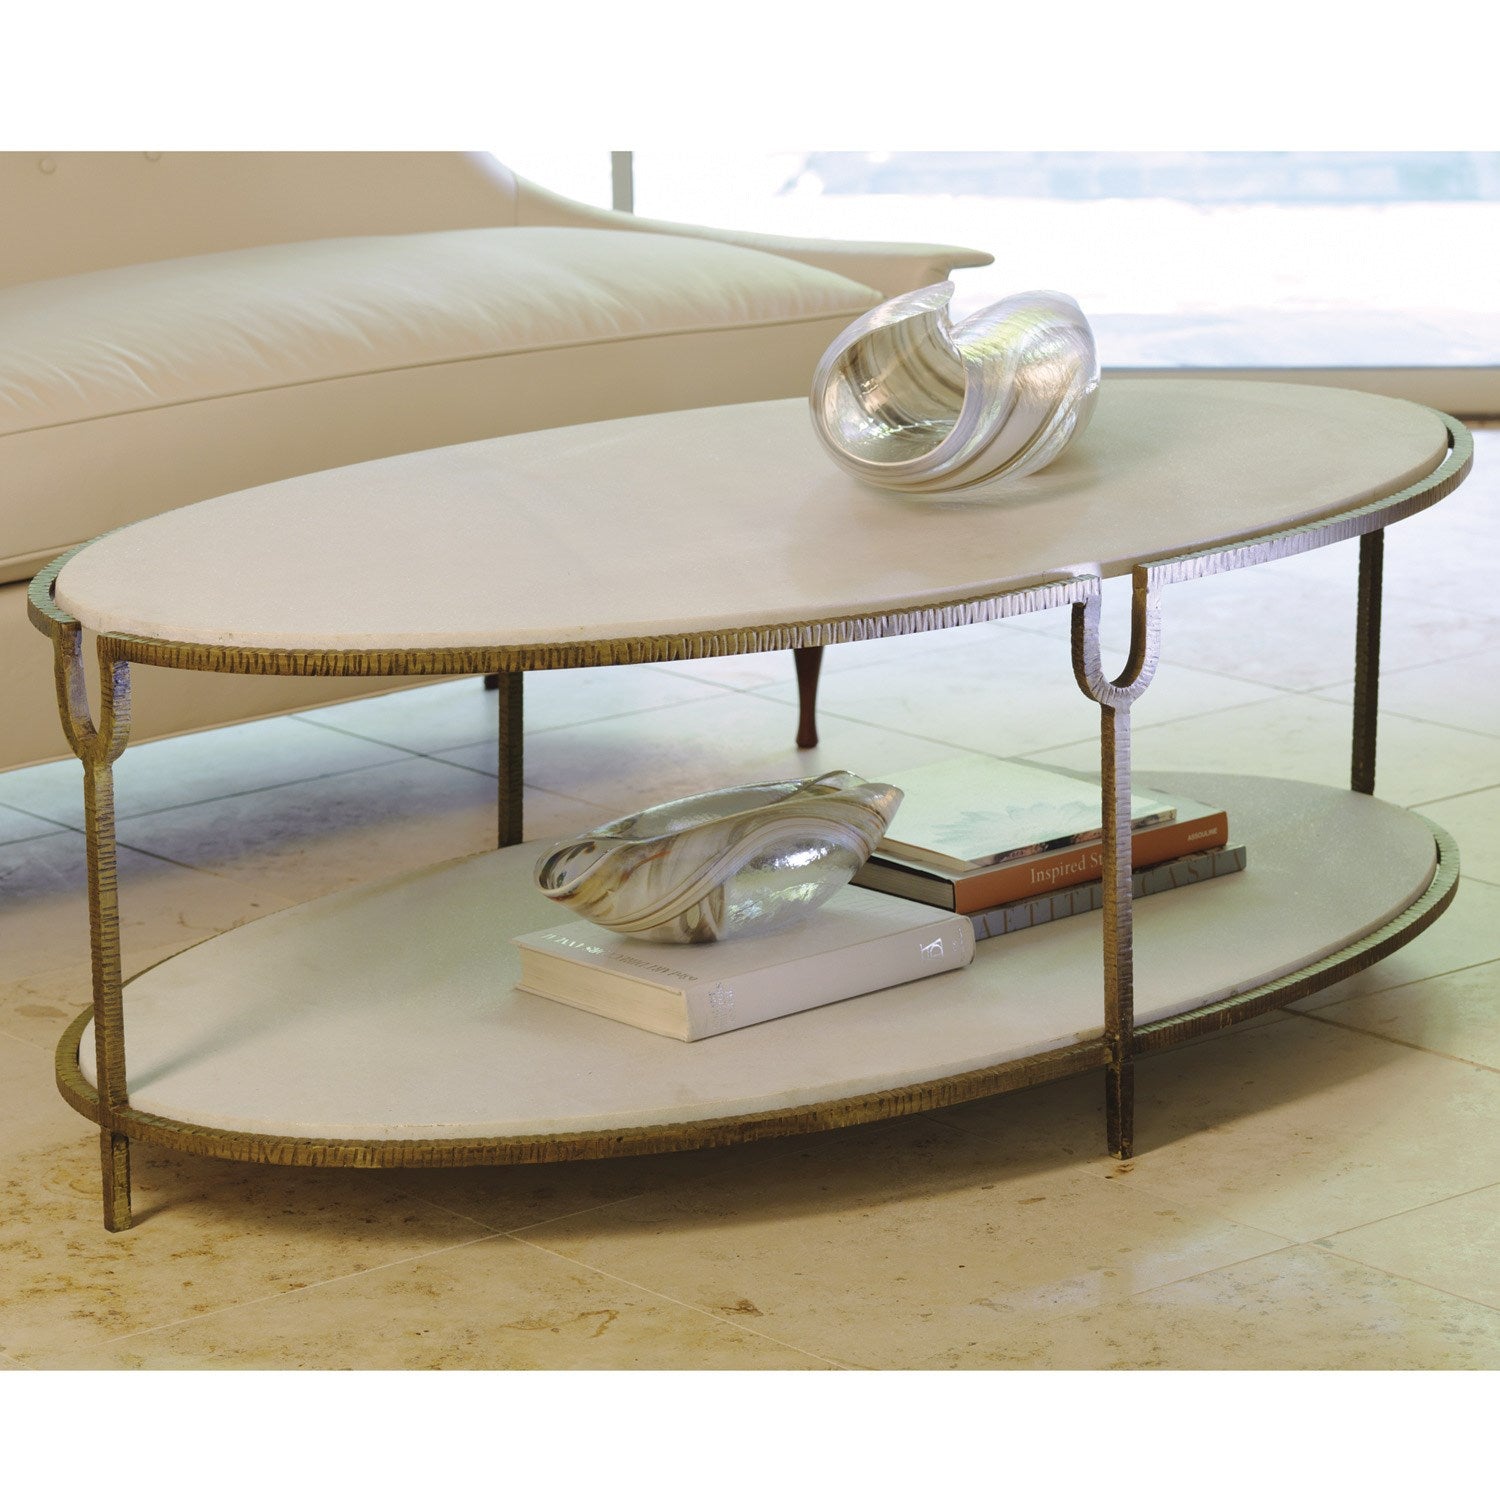 Iron and Stone Oval Coffee Table - Grats Decor Interior Design & Build Inc.